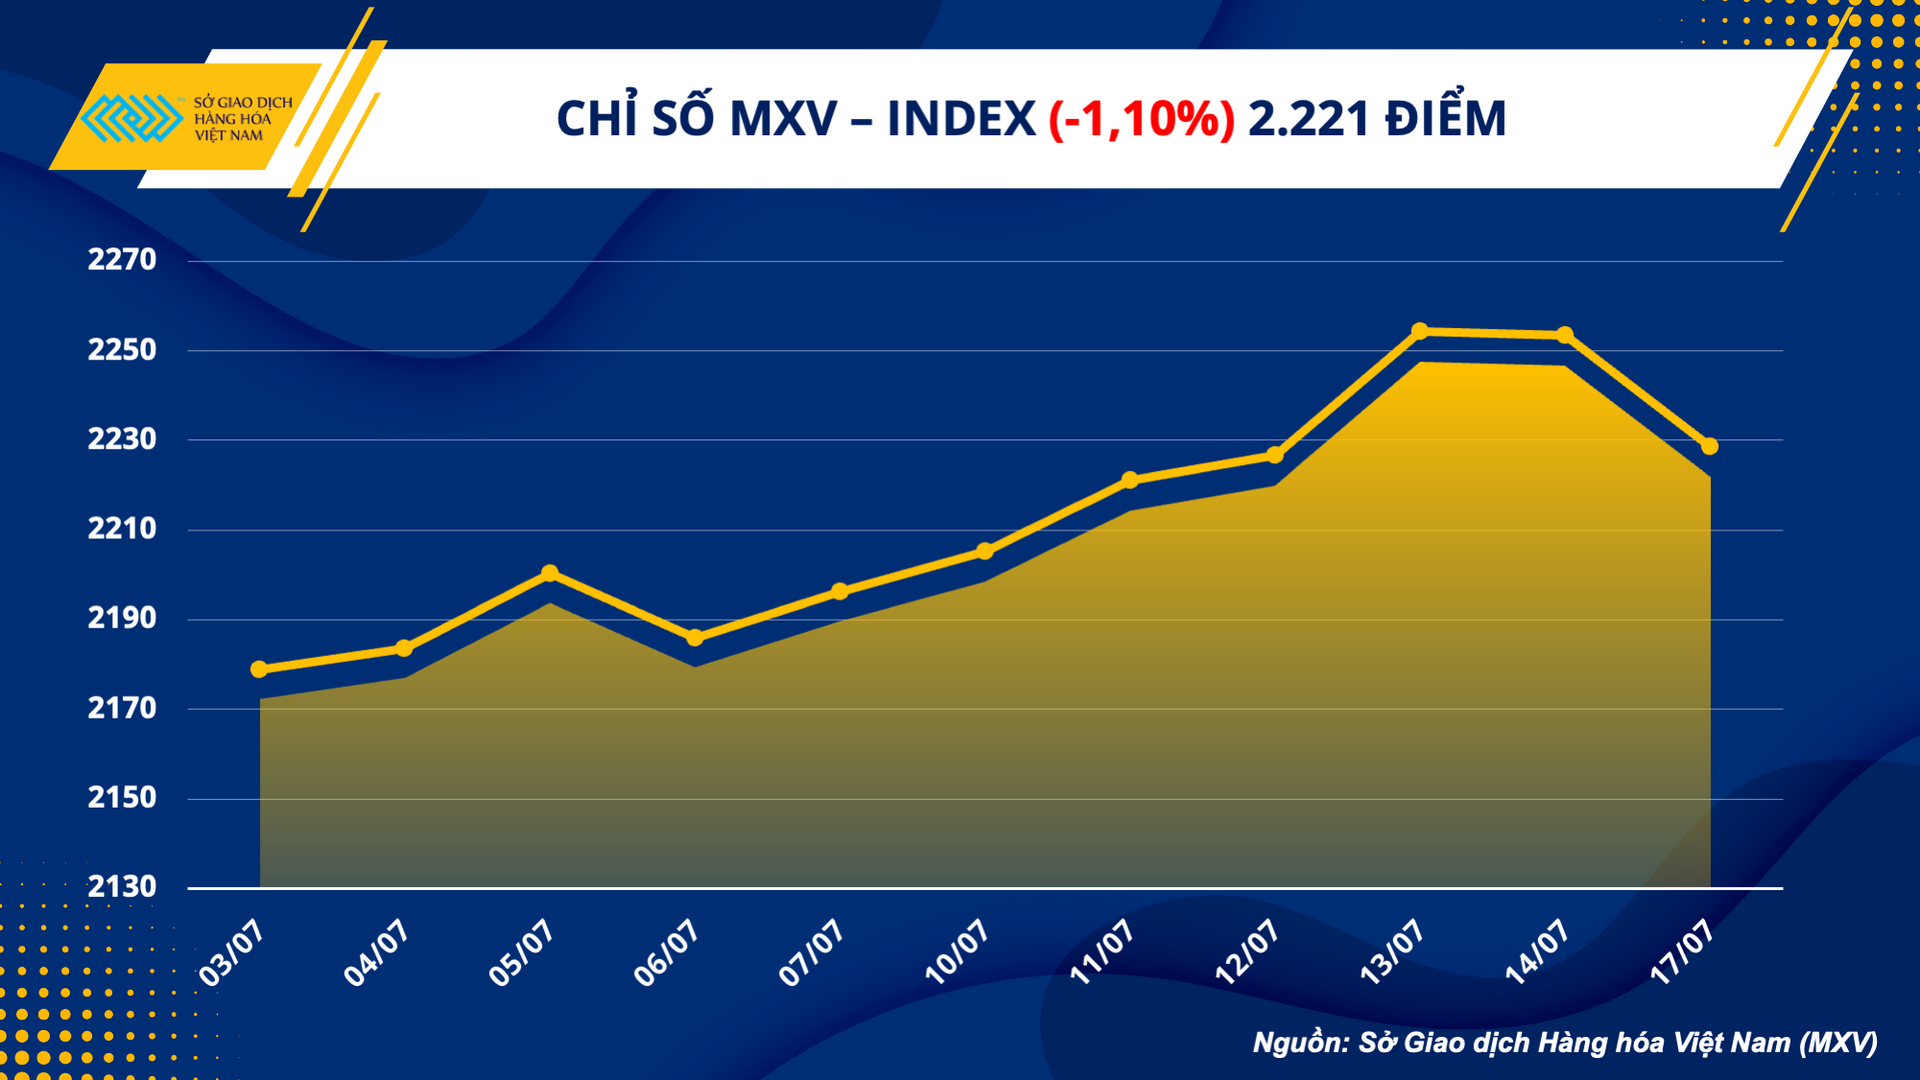 1. mxv - index (26)